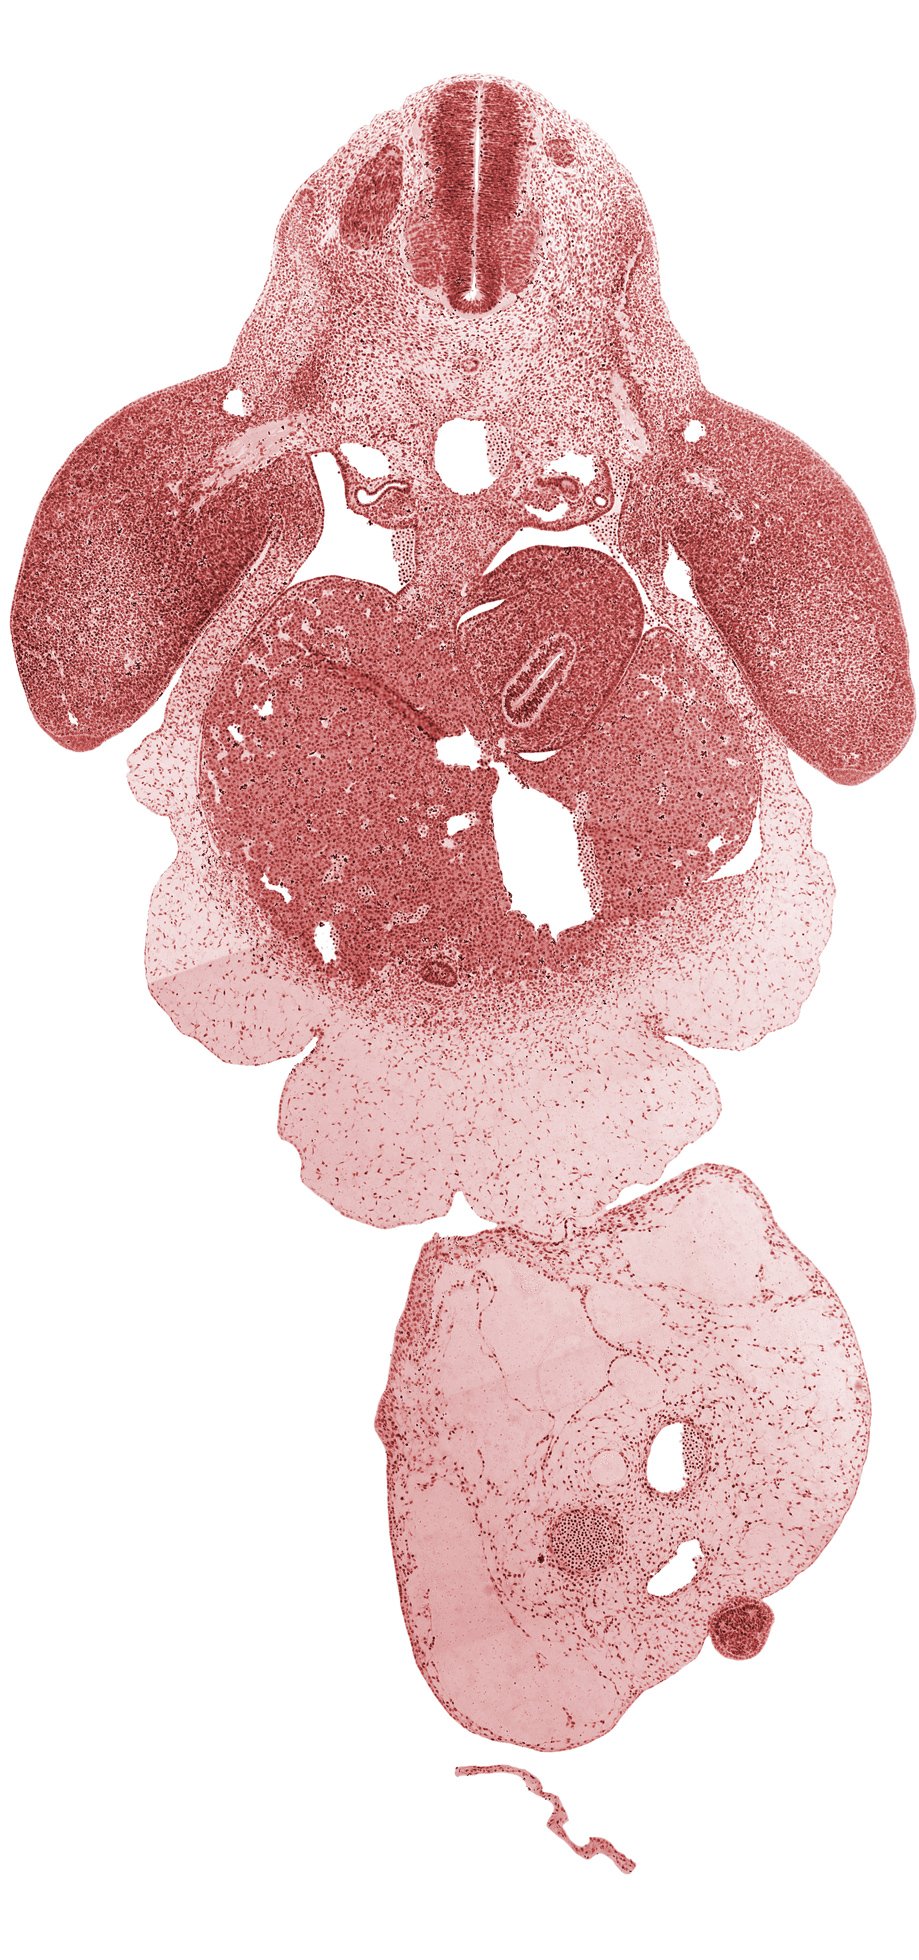 aorta, brachial plexus, caudal part of pericardial sac, cephalic edge of C-8 spinal ganglion, common umbilical vein, dermatome, dorsal mesogastrium, ductus venosus, gall bladder primordium, junction of mesonephric duct and tubule, left lobe of liver, left umbilical artery, lesser  sac, myotome, neural tube, post anal gut, postcardinal vein, right lobe of liver, right umbilical artery, septum transversum, stomach, tip of caudal eminence, umbilical coelom, umbilical cord, upper limb